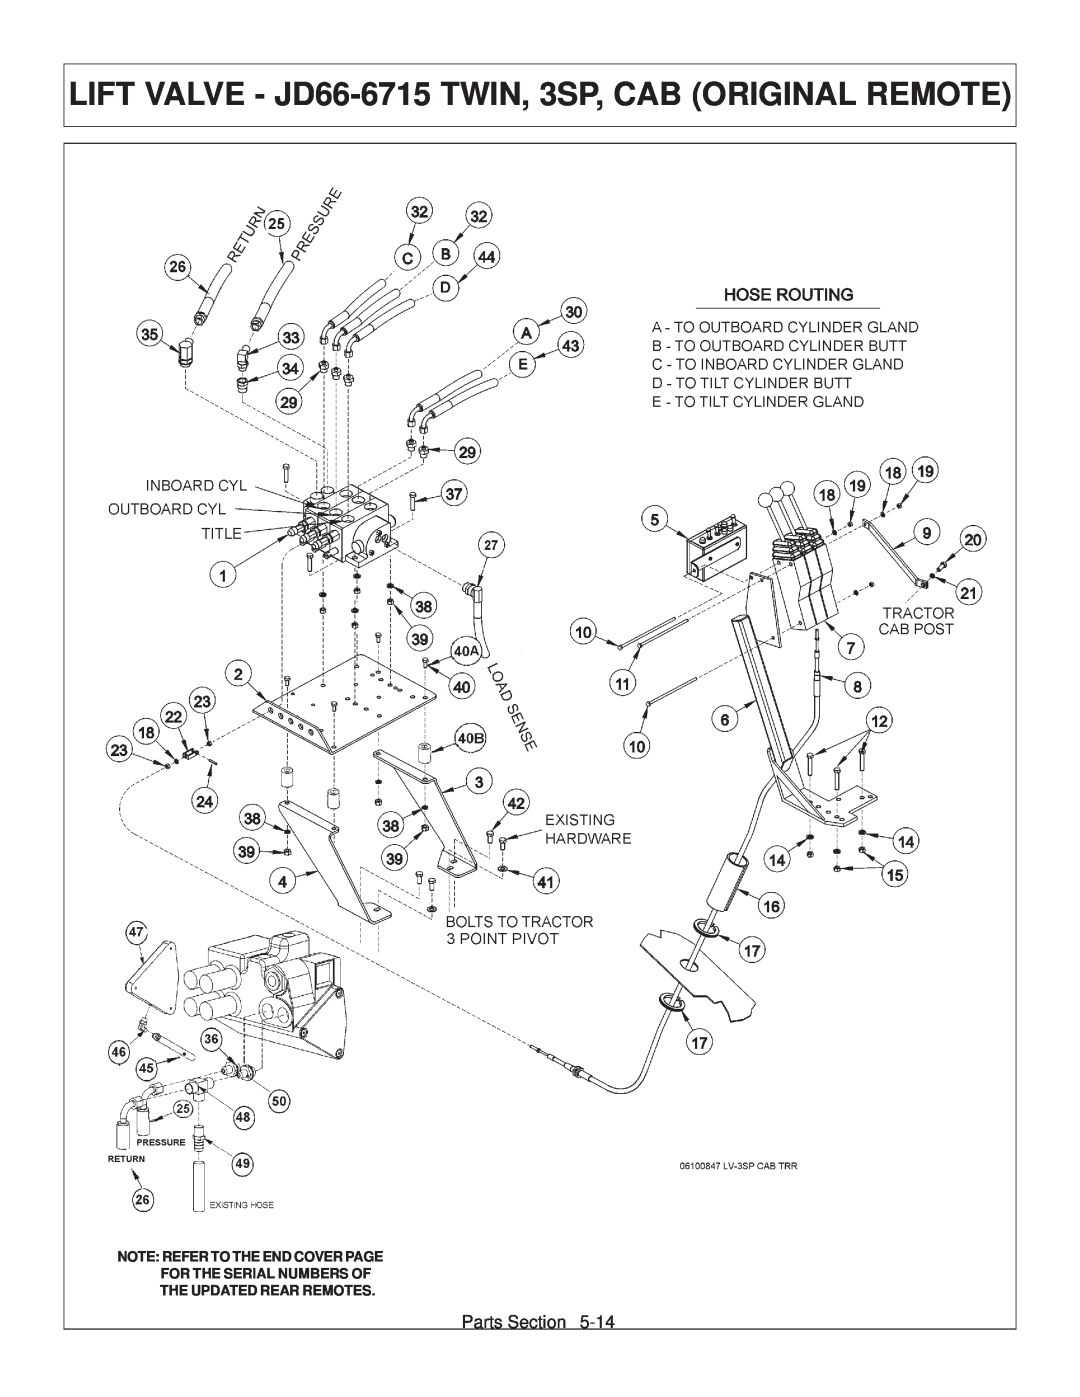 Tiger Products Co., Ltd JD 72-7520 manual LIFT VALVE - JD66-6715 TWIN, 3SP, CAB ORIGINAL REMOTE, Parts Section 